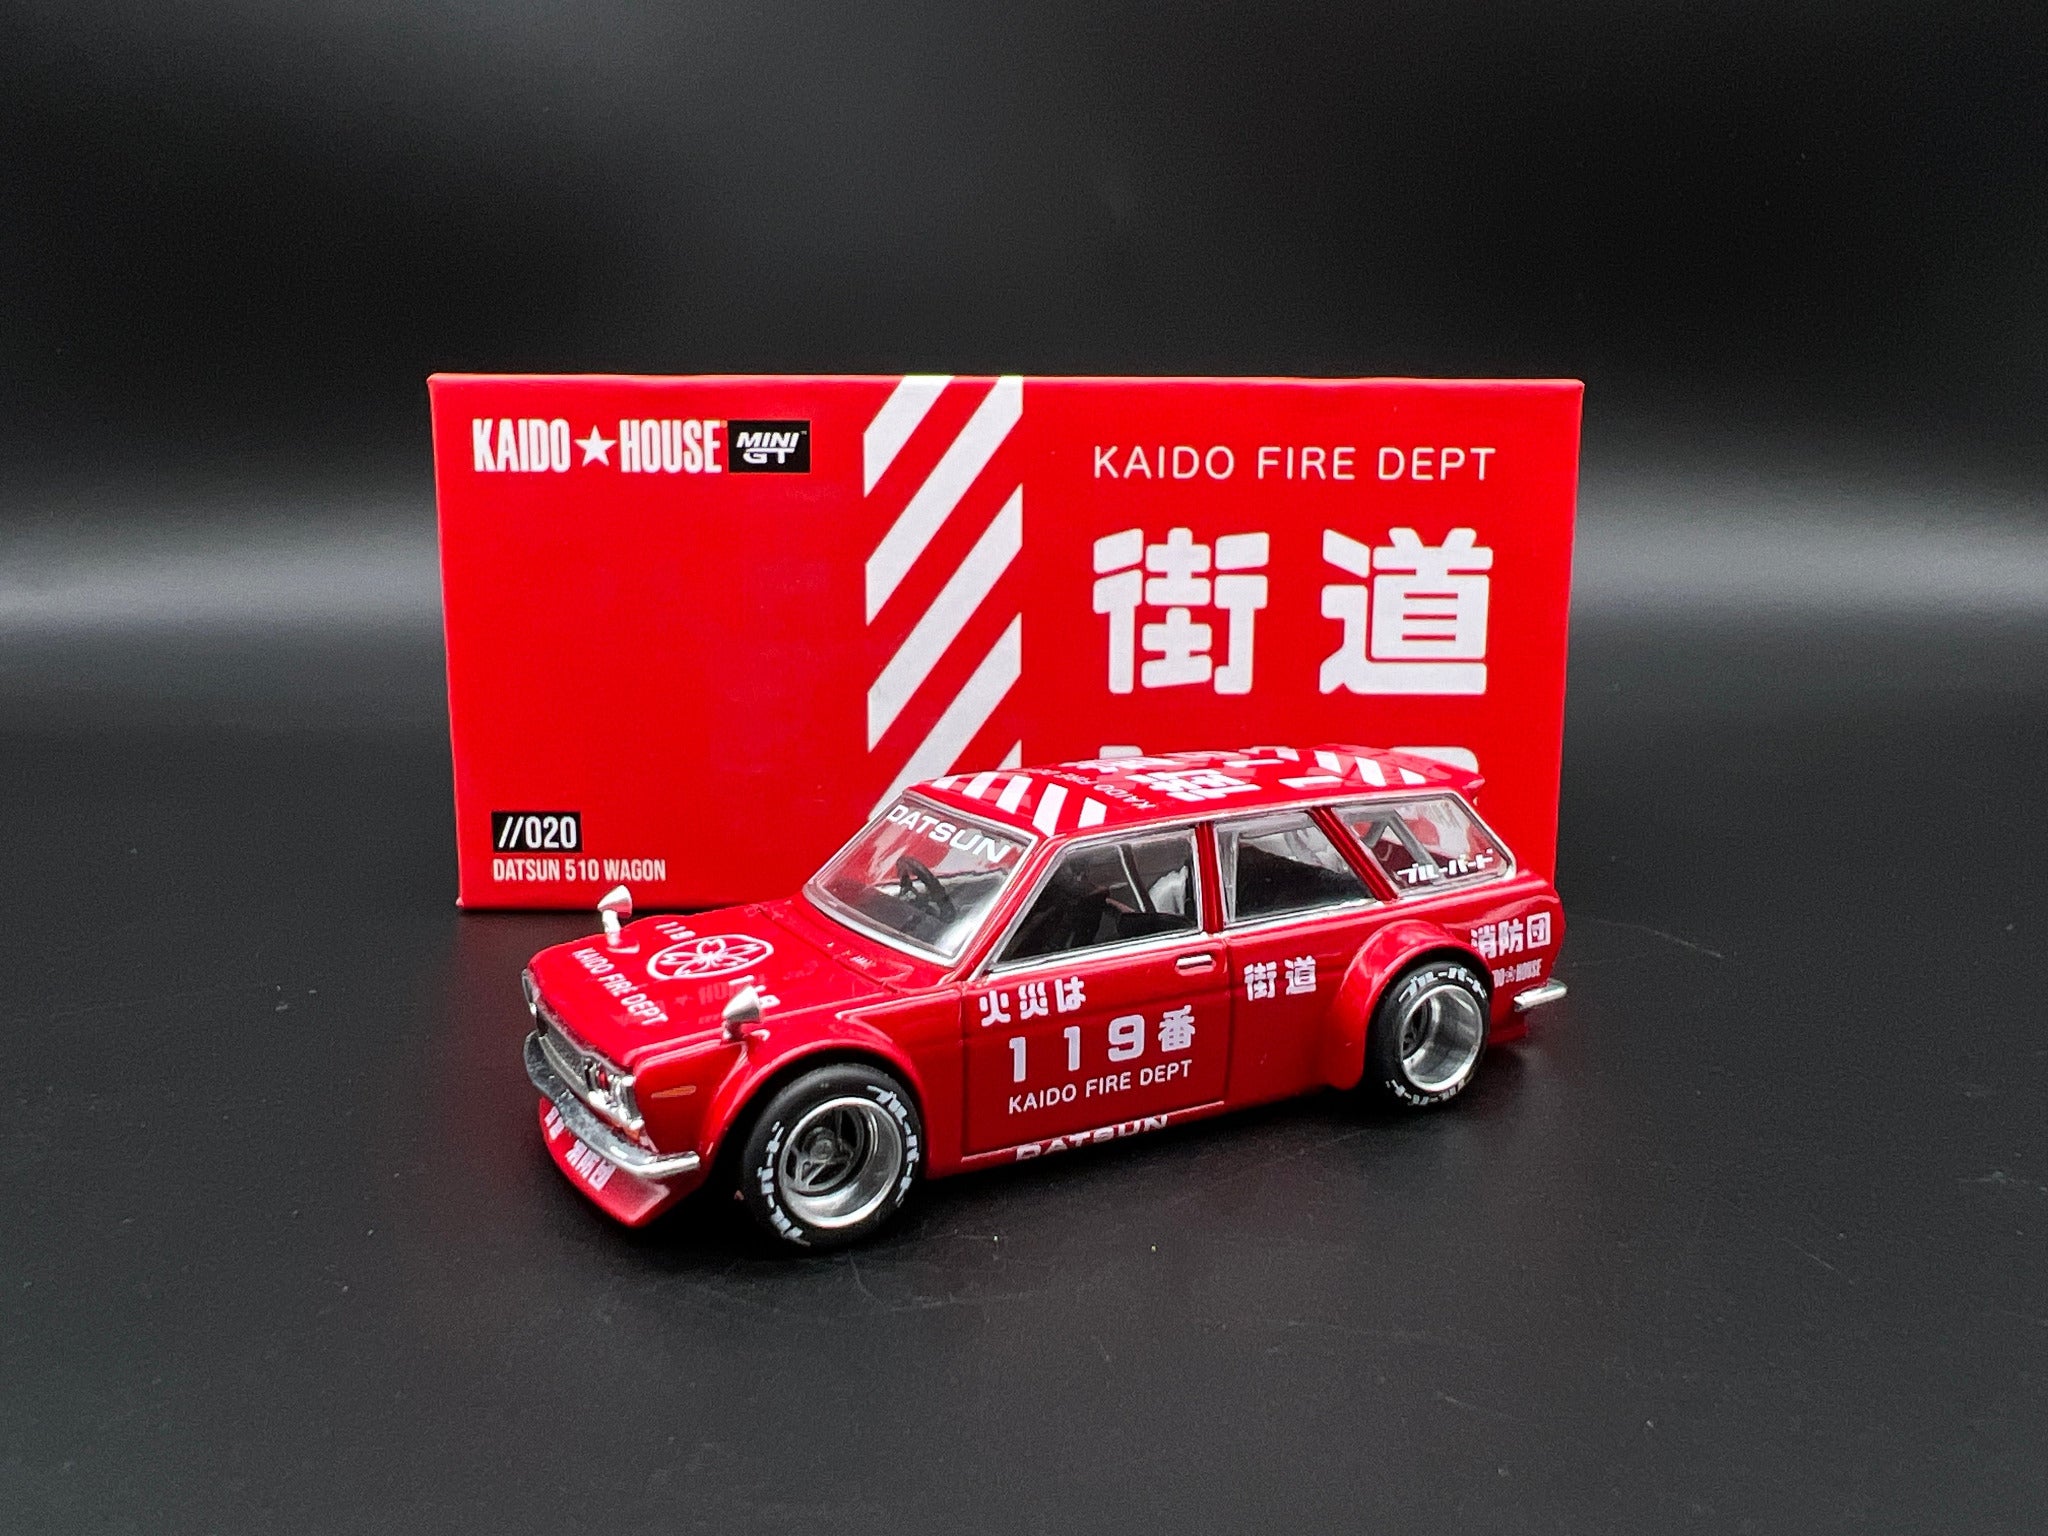 MINI GT - KAIDO HOUSE DATSUN 510 PRO STREET RED – Boss Company